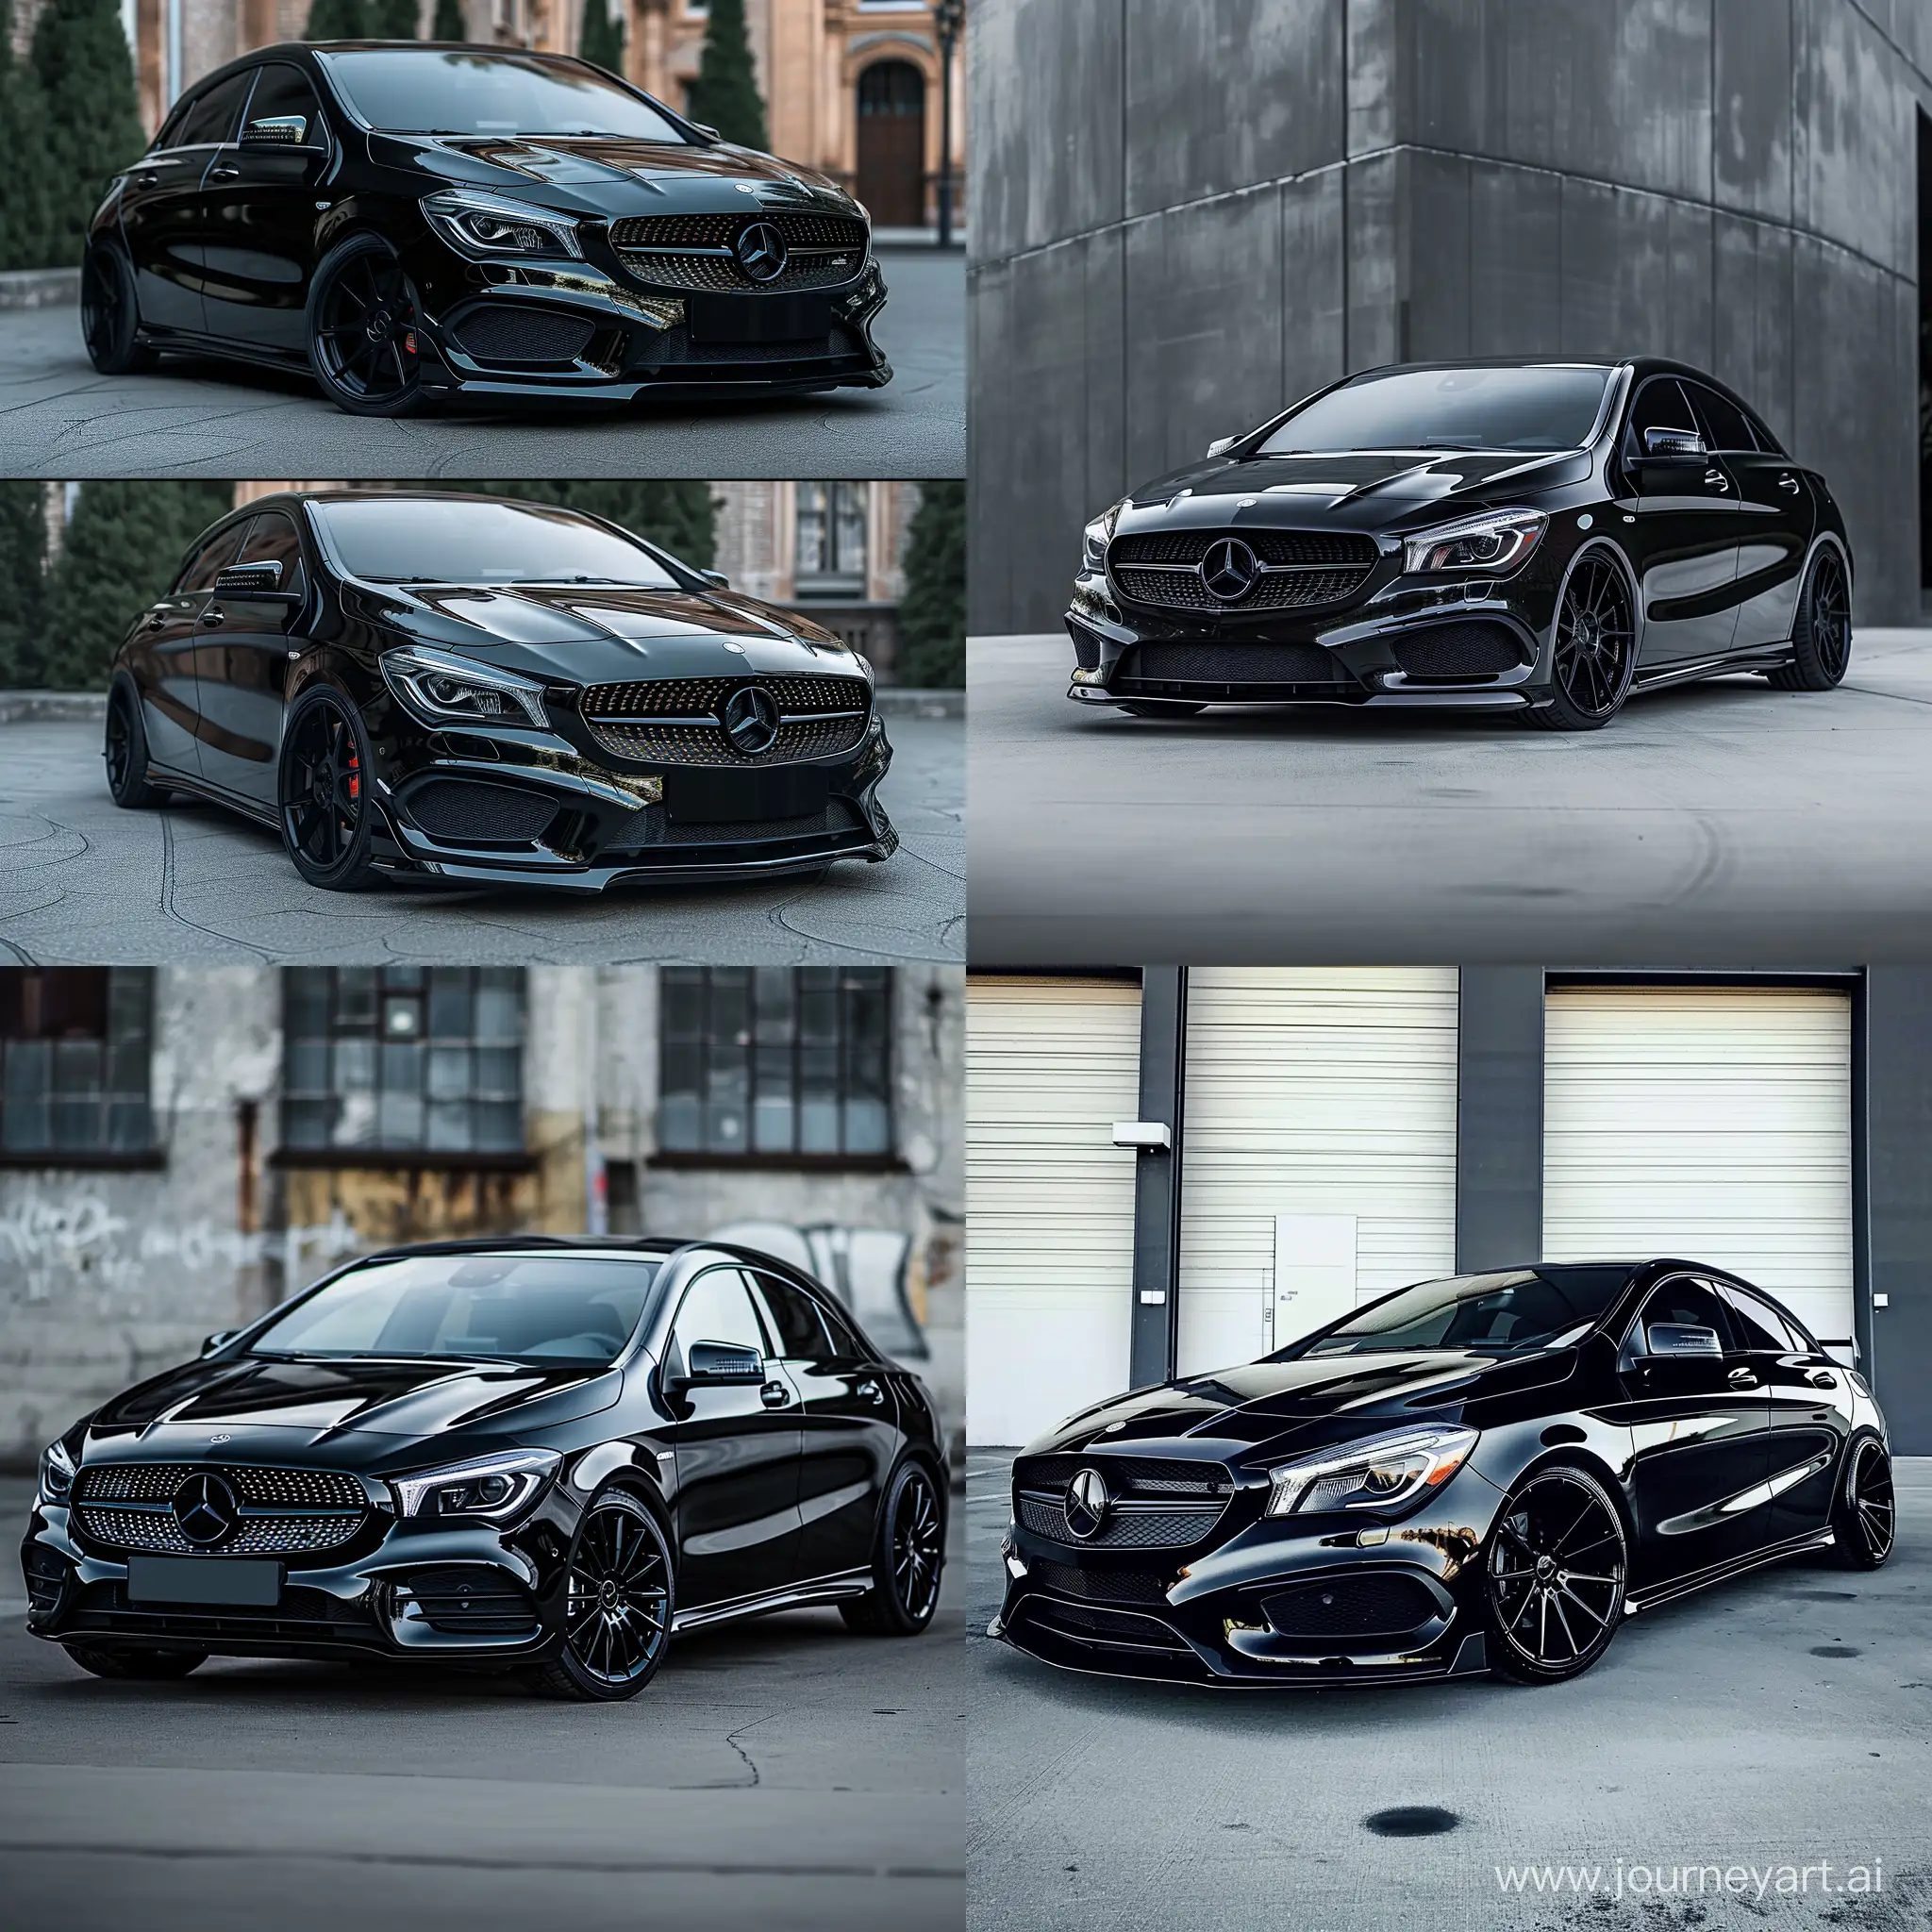 Luxurious-Black-Mercedes-CLA-V6-in-a-Dynamic-Setting